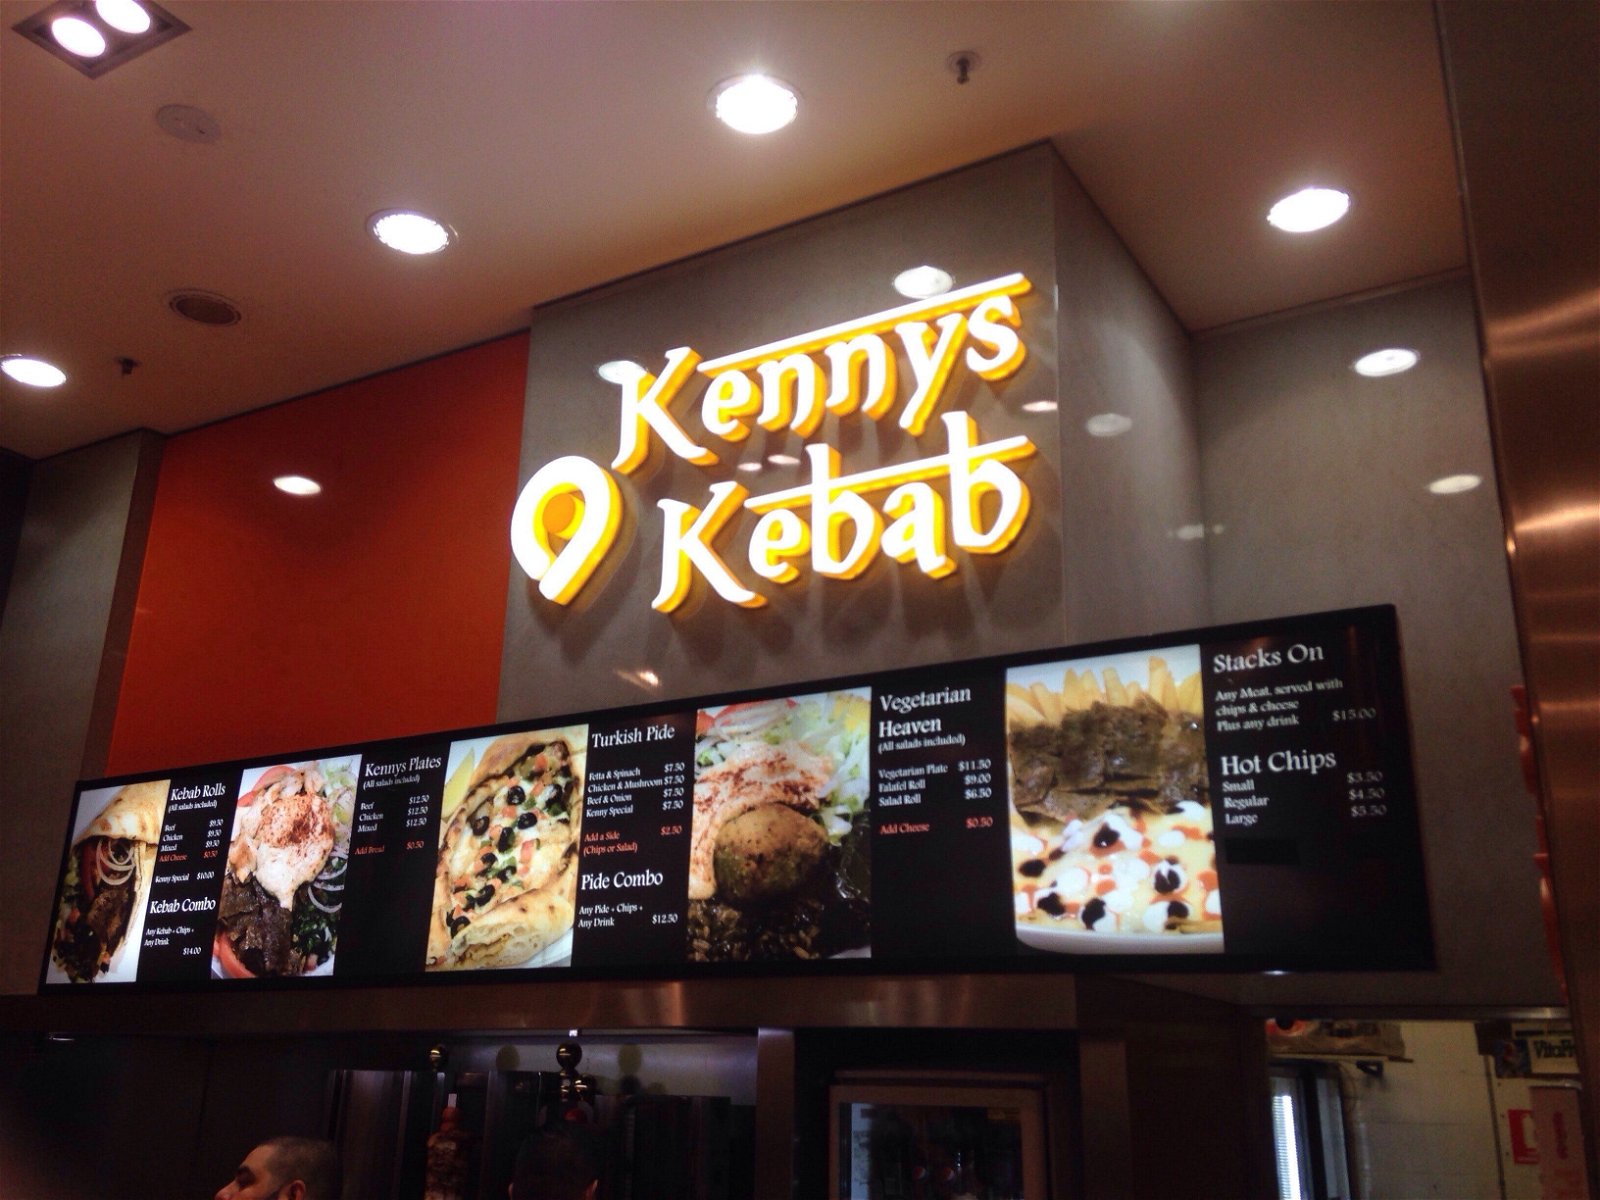 Kennys Kebab - Pubs Sydney